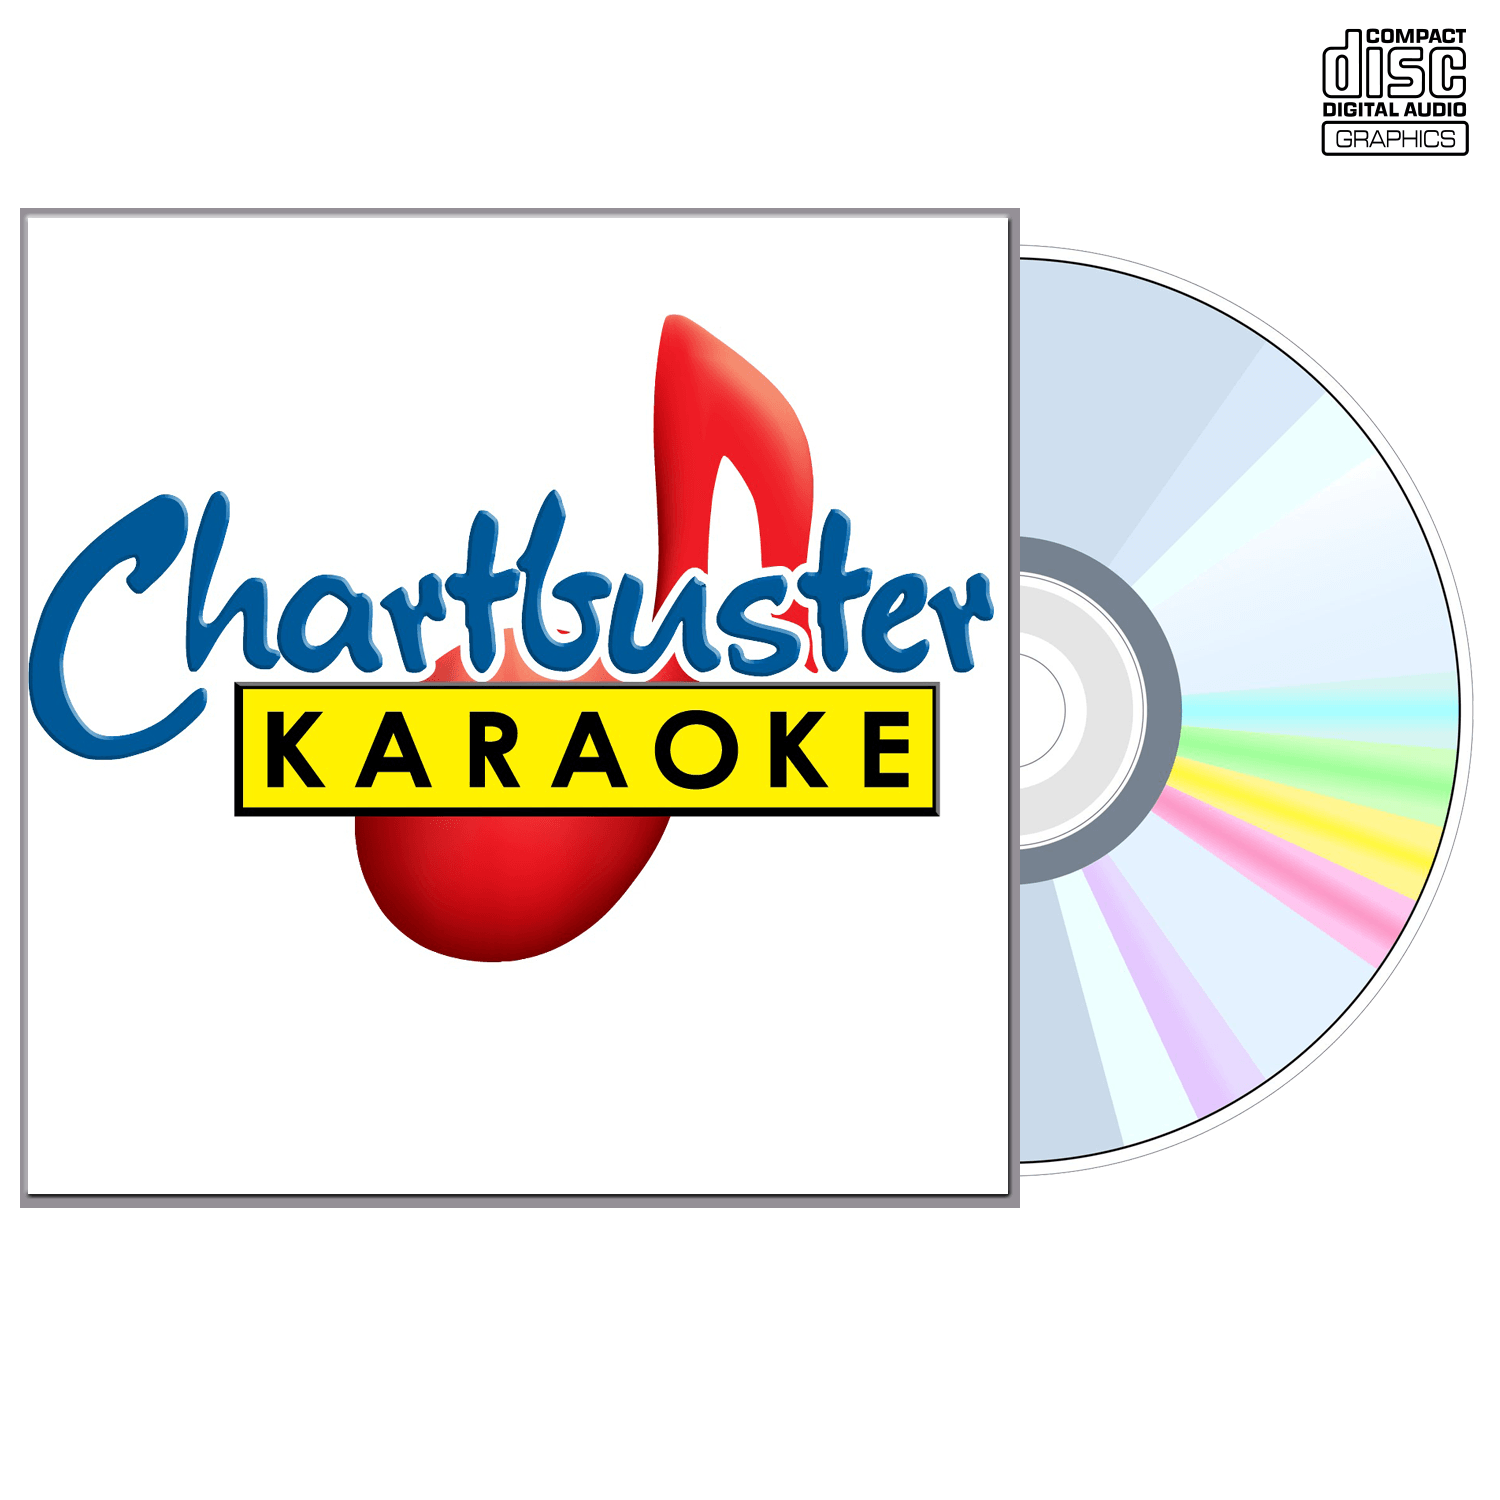 Ultimate 90's Collection V02 - CD+G - Chartbuster Karaoke - Karaoke Home Entertainment